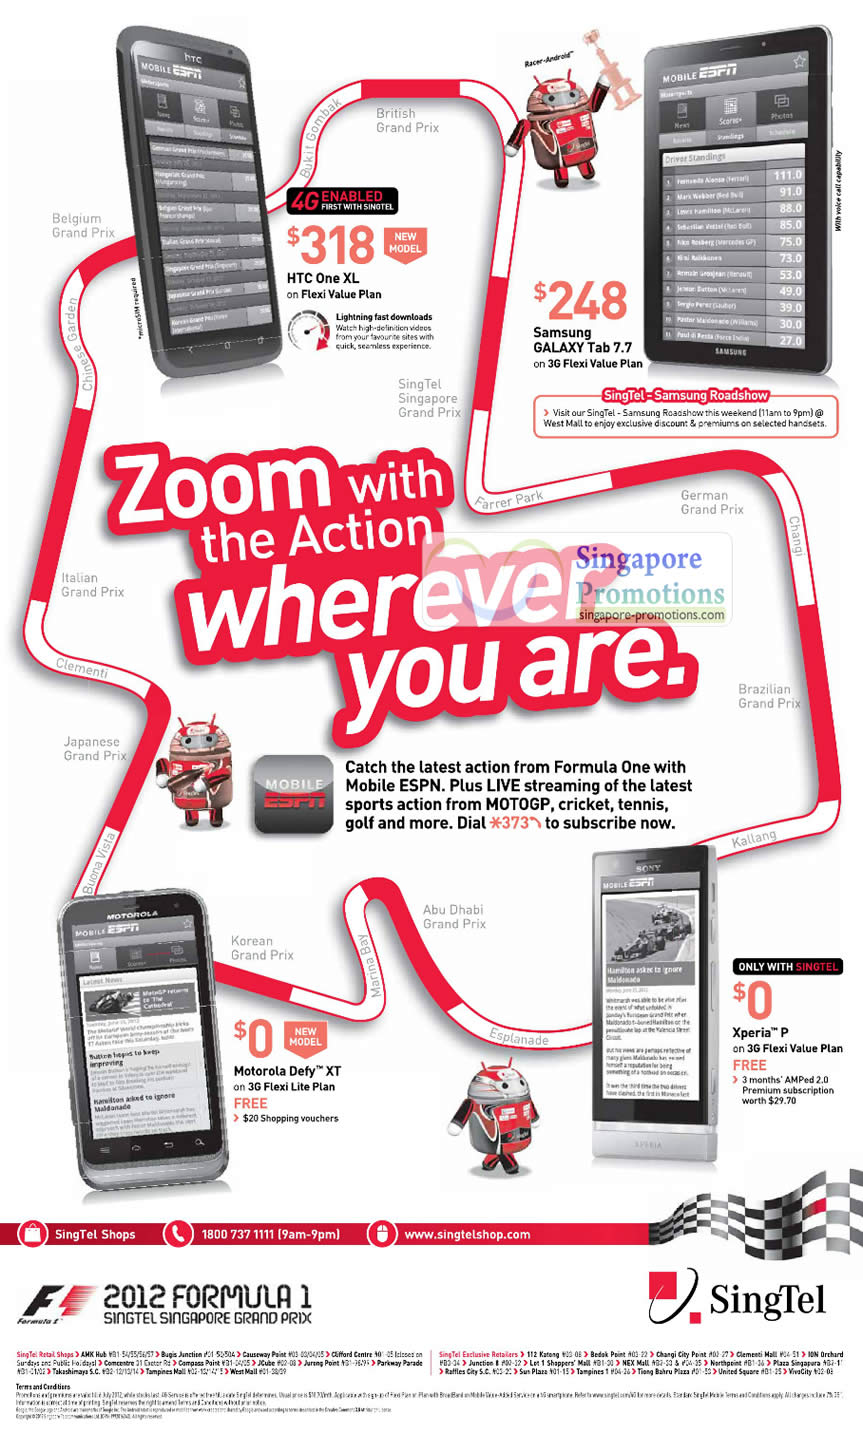 Featured image for Singtel Smartphones, Tablets, Home/Mobile Broadband & Mio TV Offers 30 Jun - 6 Jul 2012